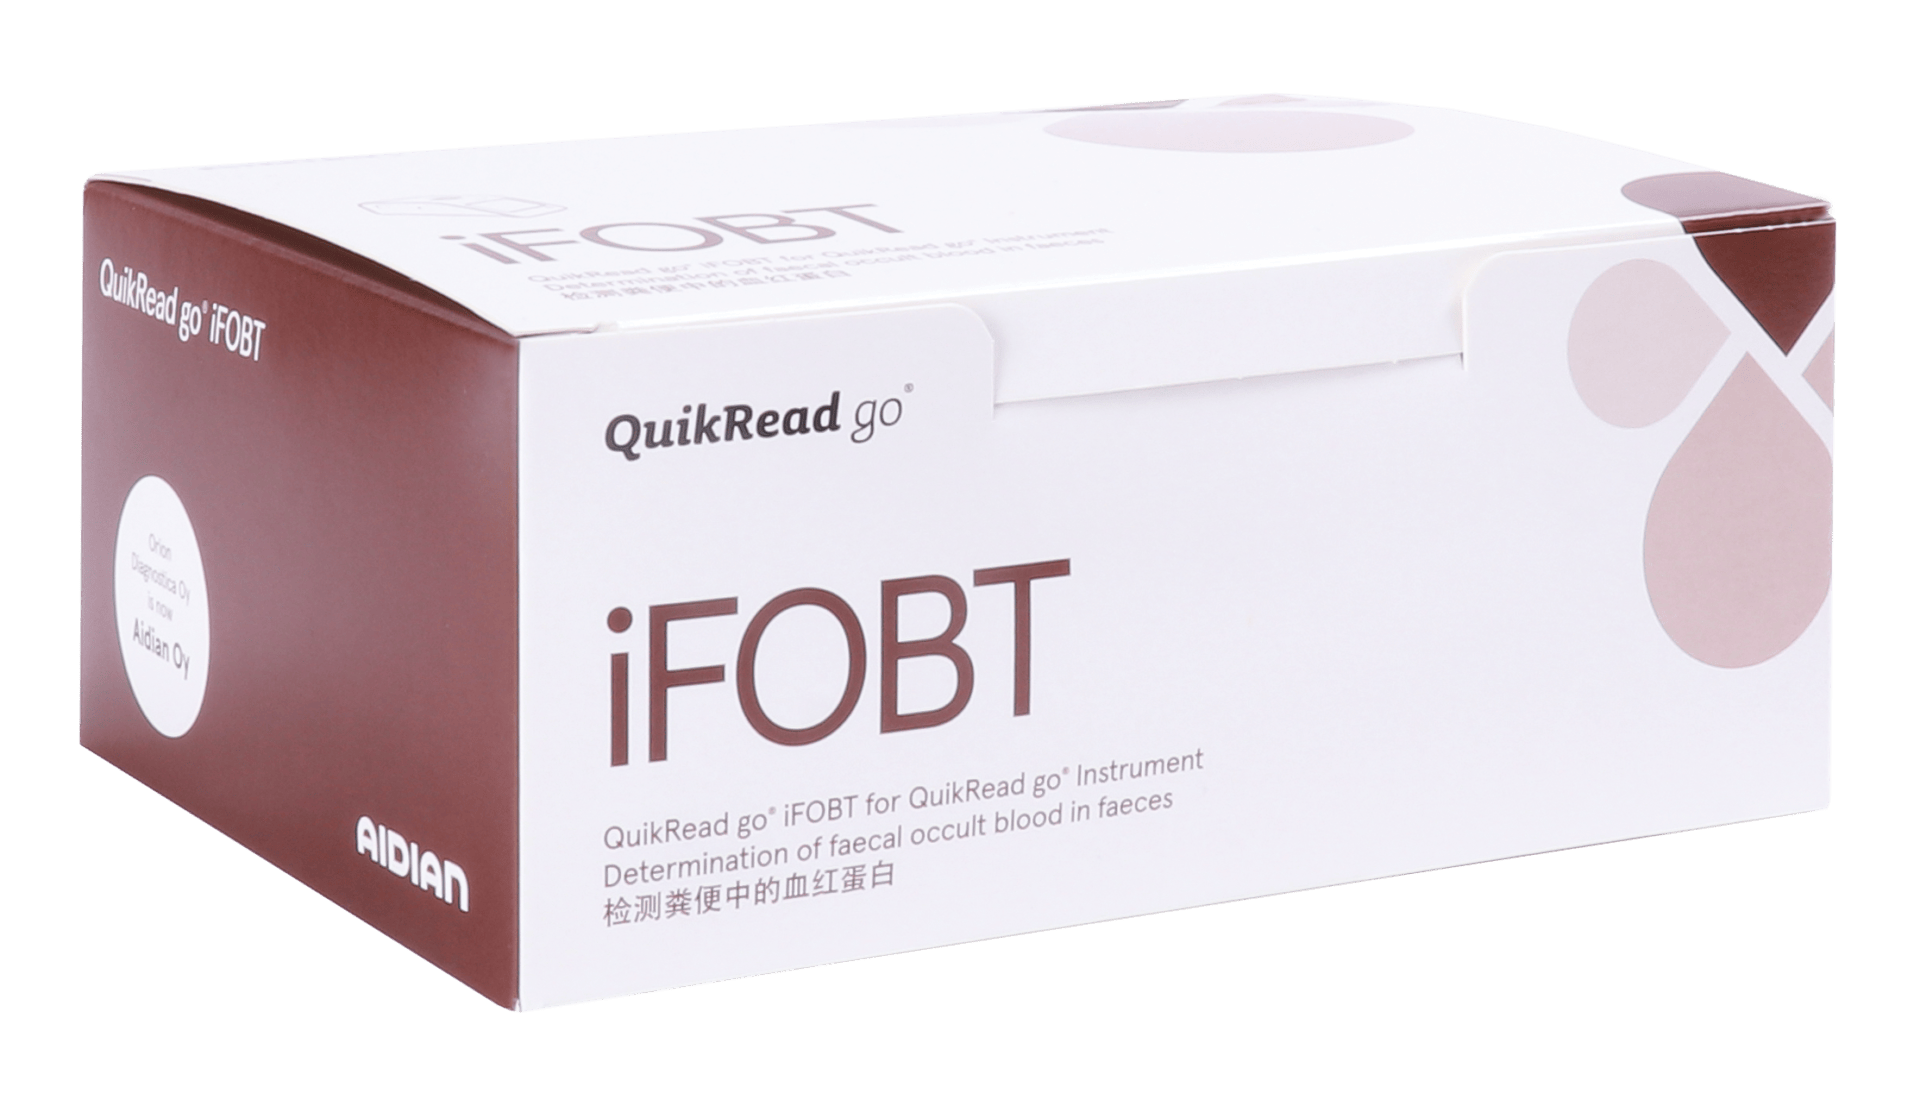 QuikRead go iFOBT tests